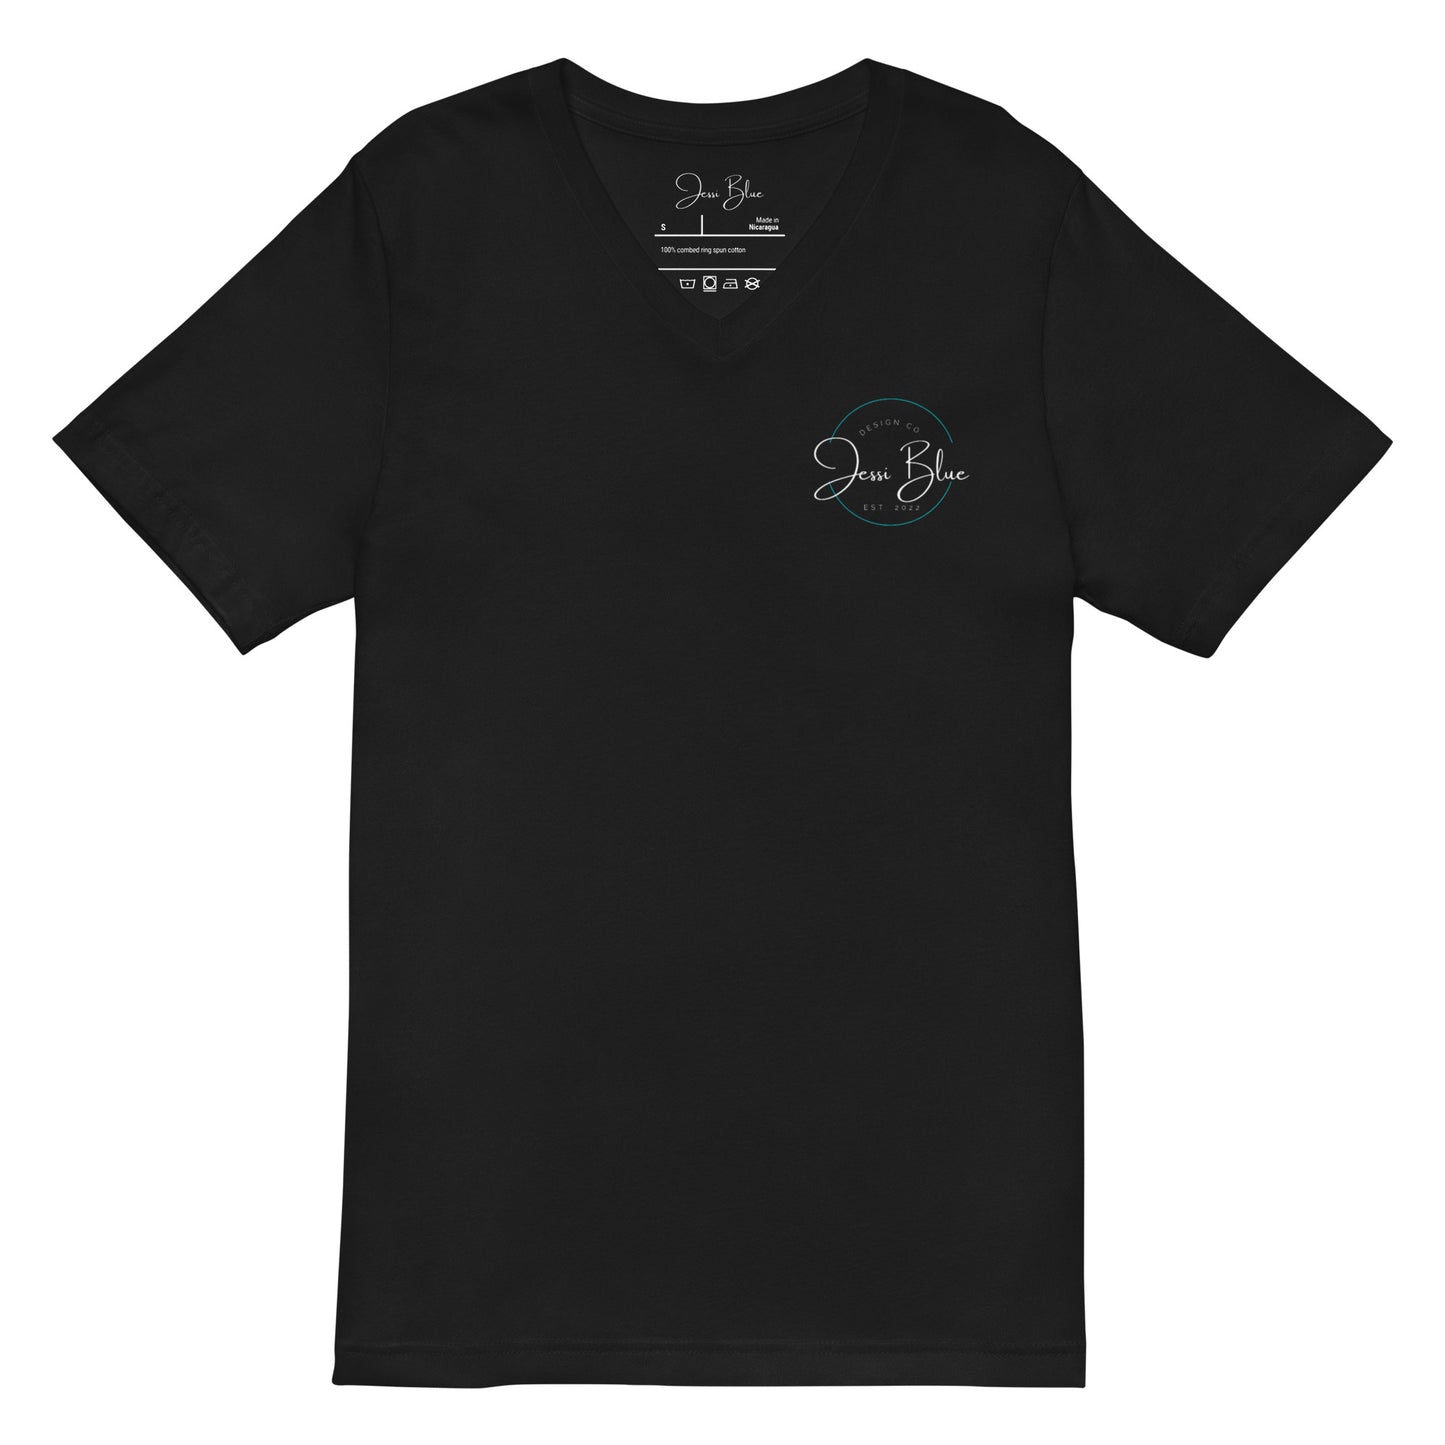 Jessi Blue Design Co. Unisex Short Sleeve V-Neck T-Shirt